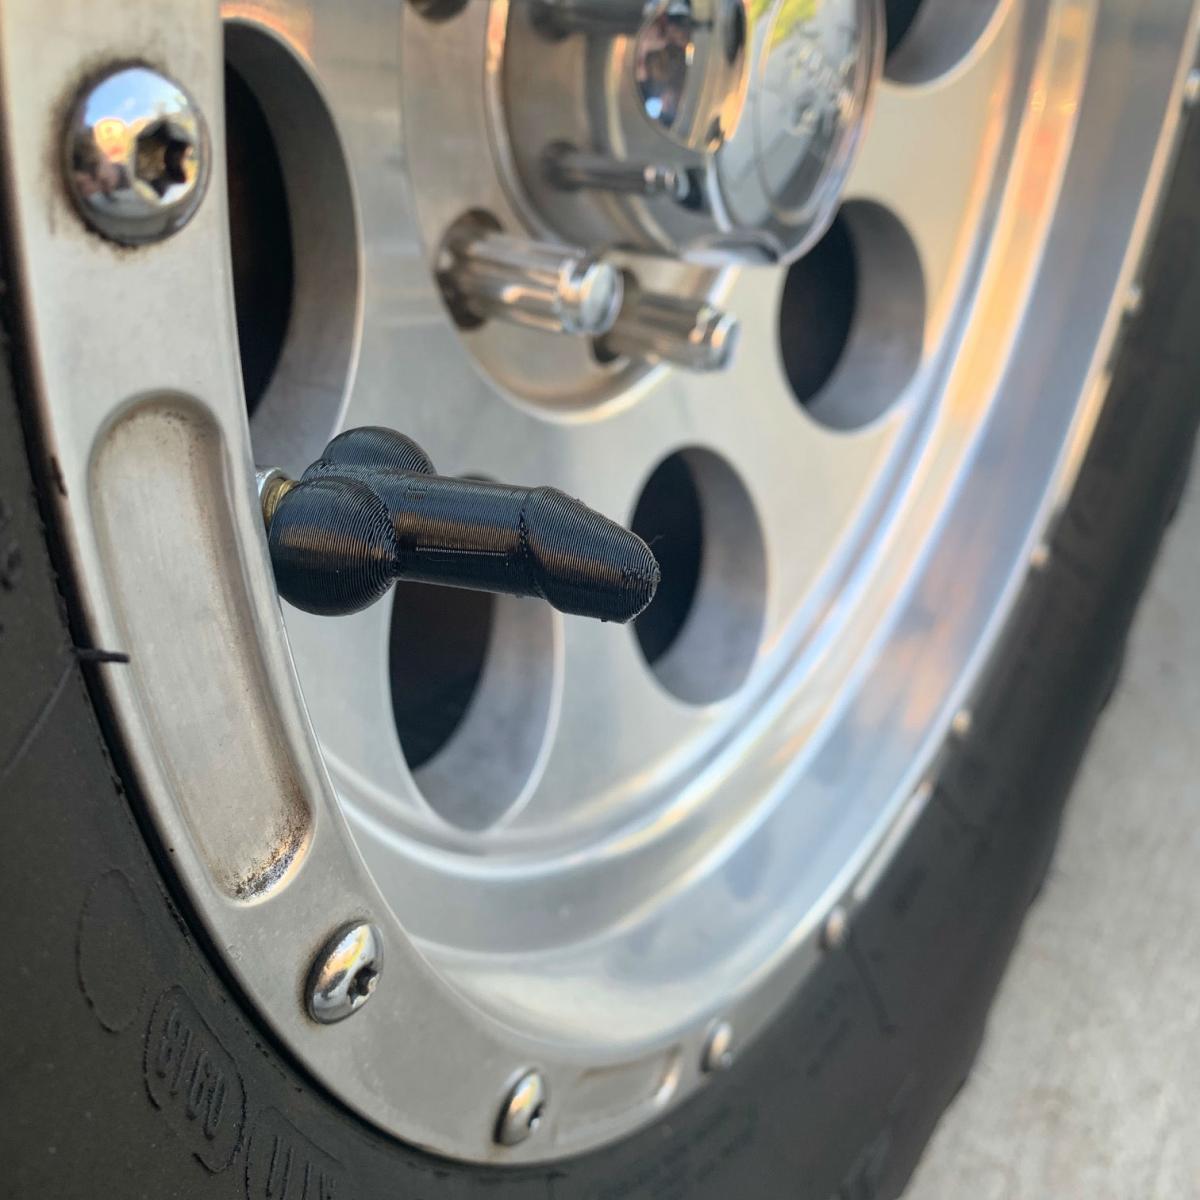 Prank Wiener Shaped Tire Valve Stem Caps - Tirecocks funny penis shaped tire caps